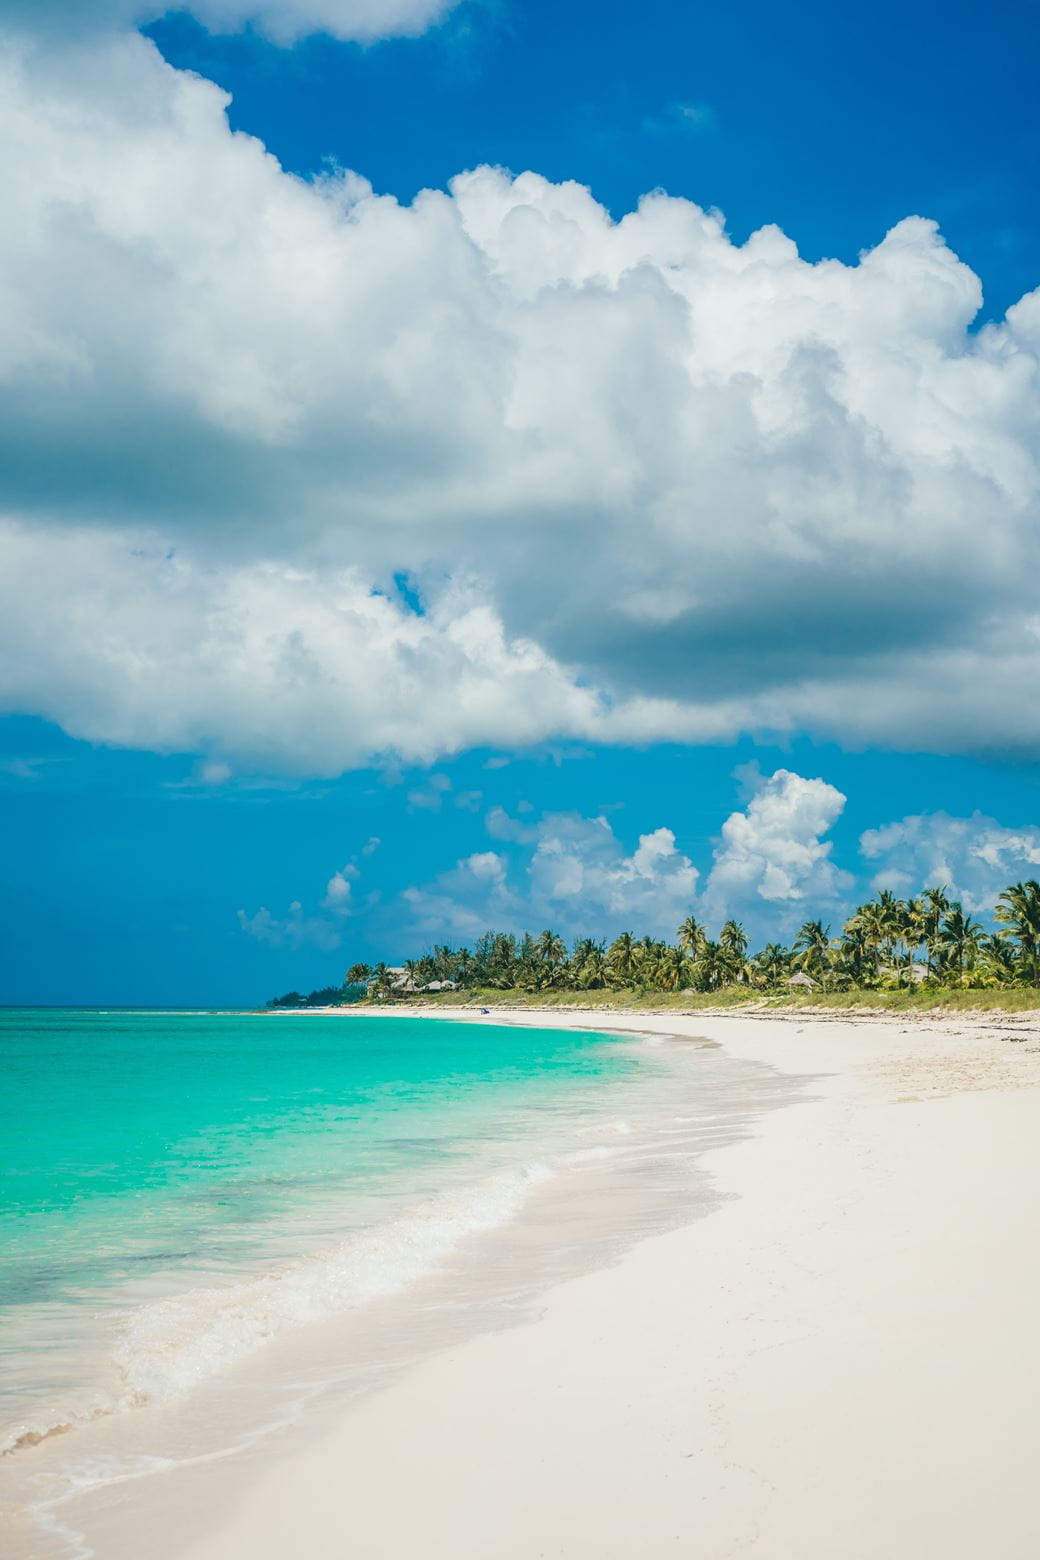 Spiaggia delle Bahamas